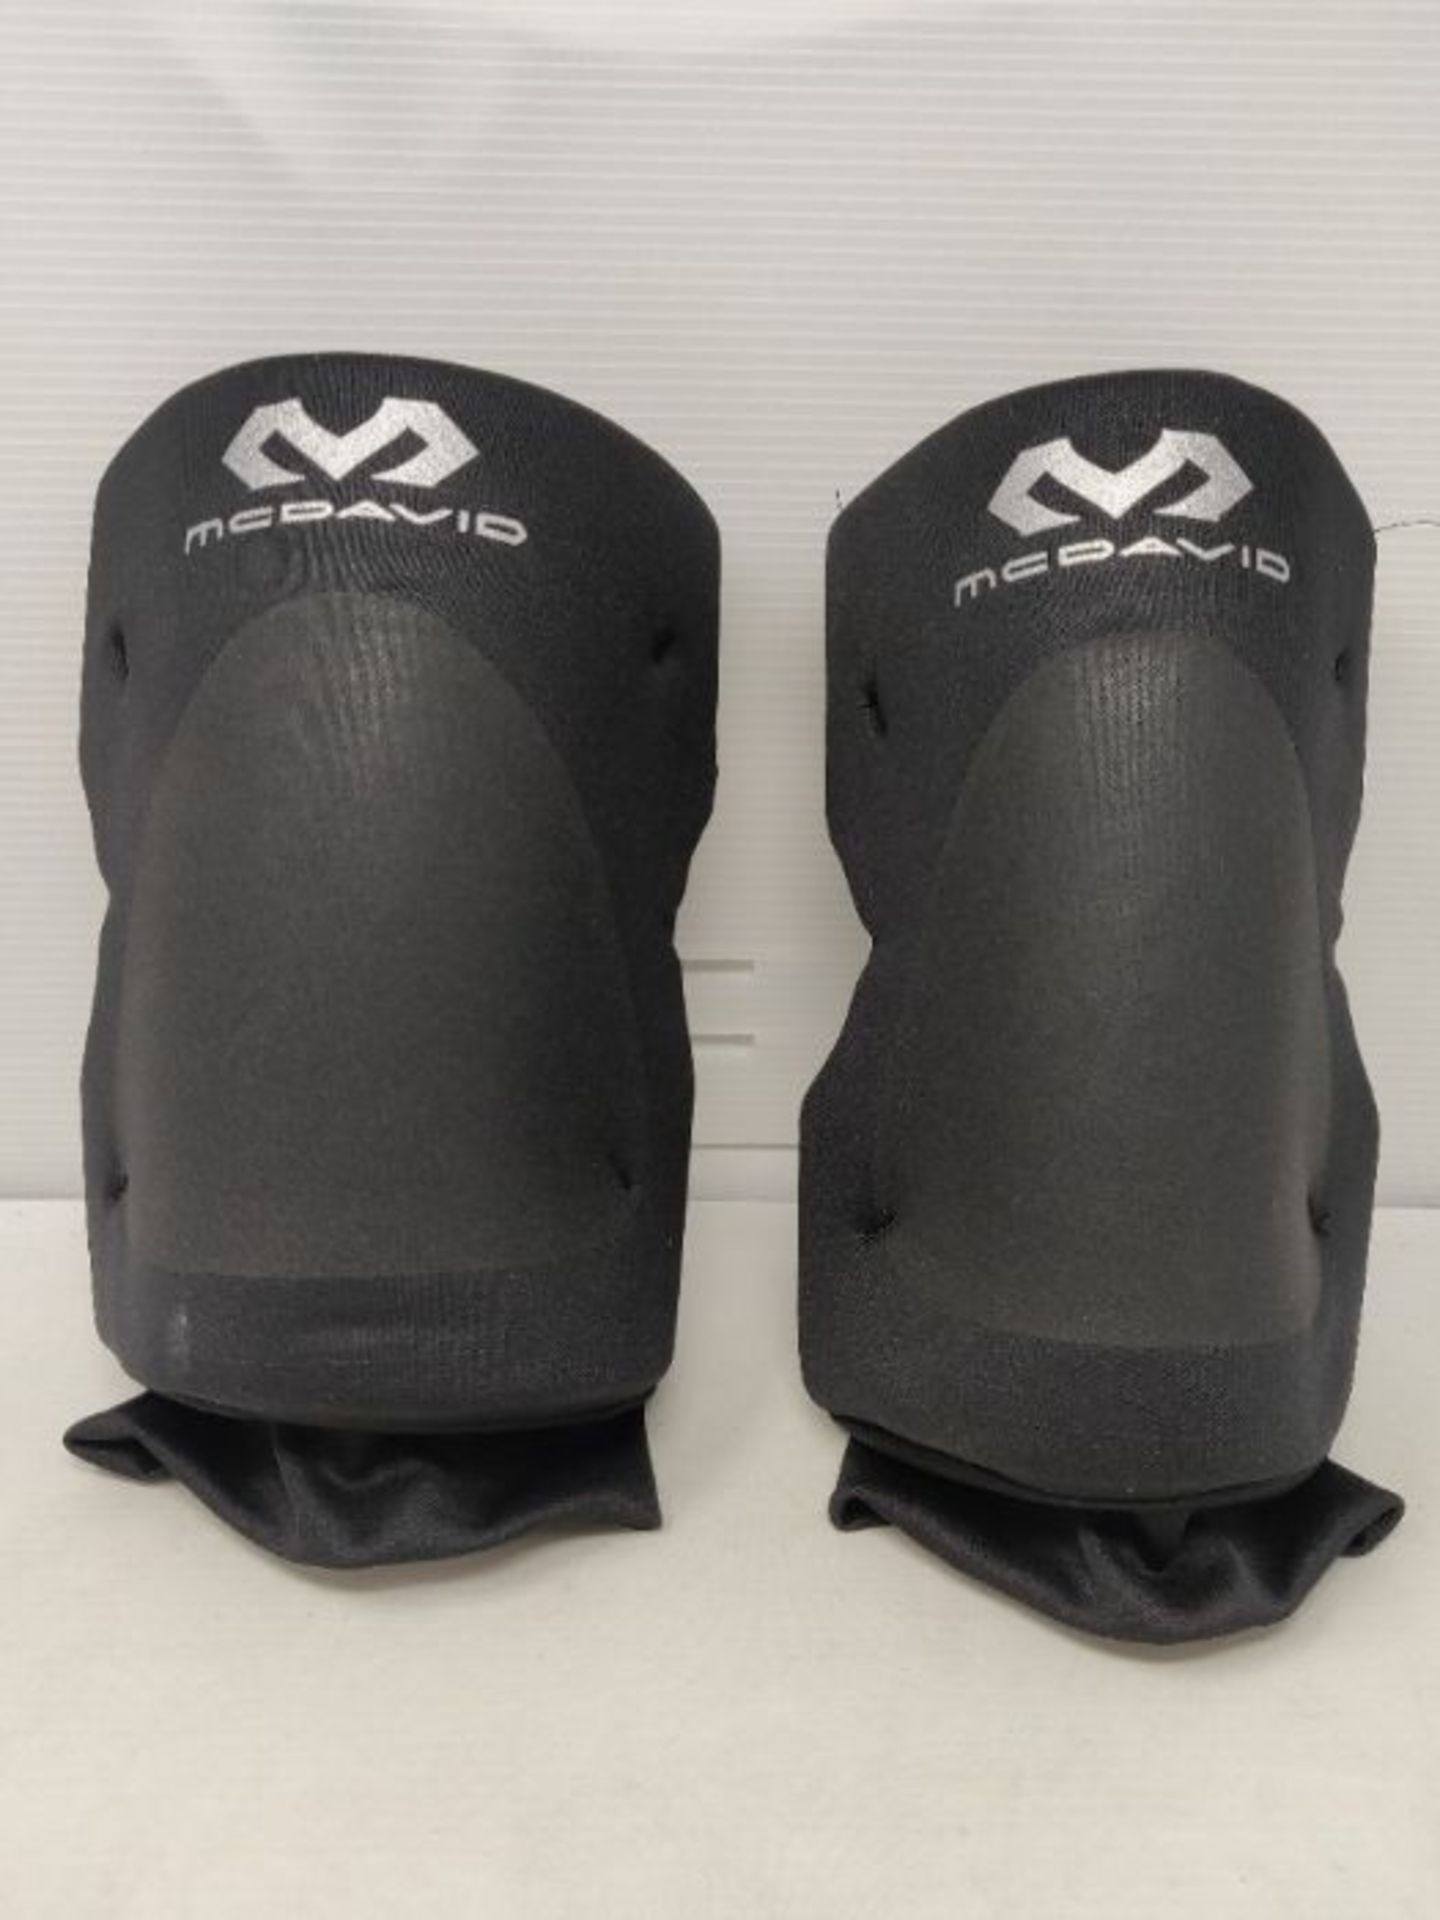 Mcdavid Volleyball Knee Pad - Image 3 of 3